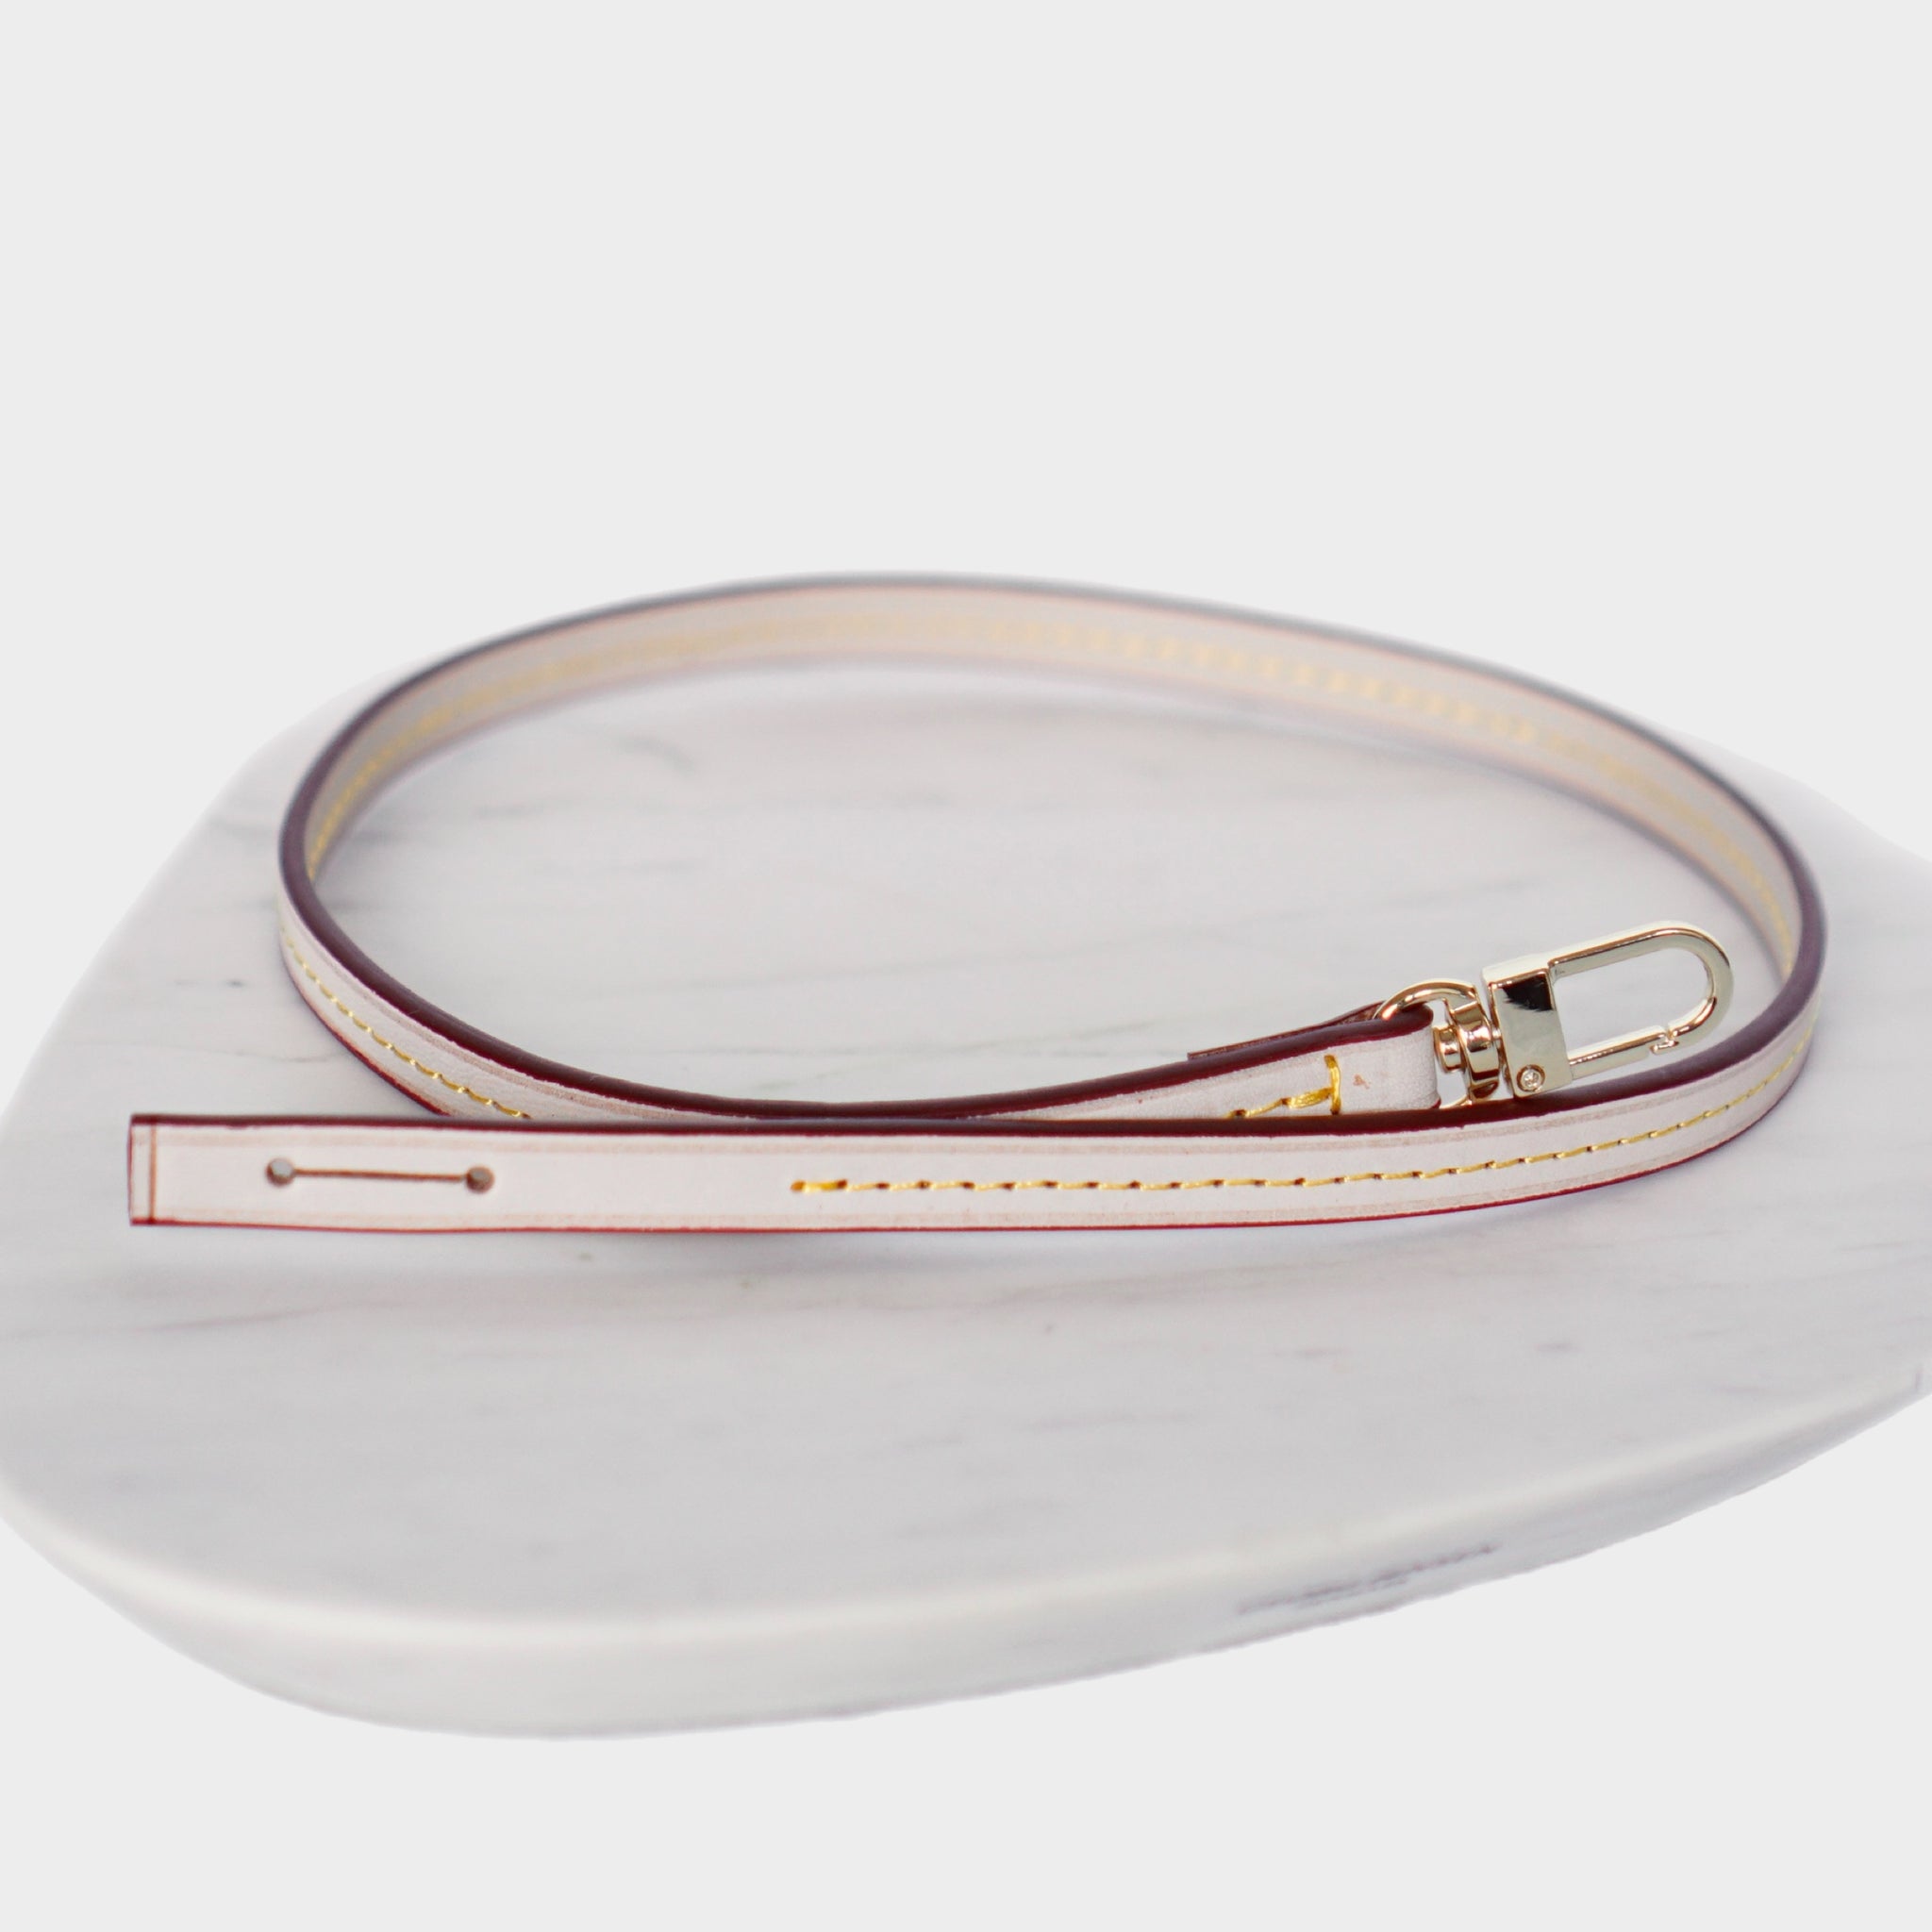 Replacement Leather Shoulder Bag Strap for Louis Vuitton Pochette